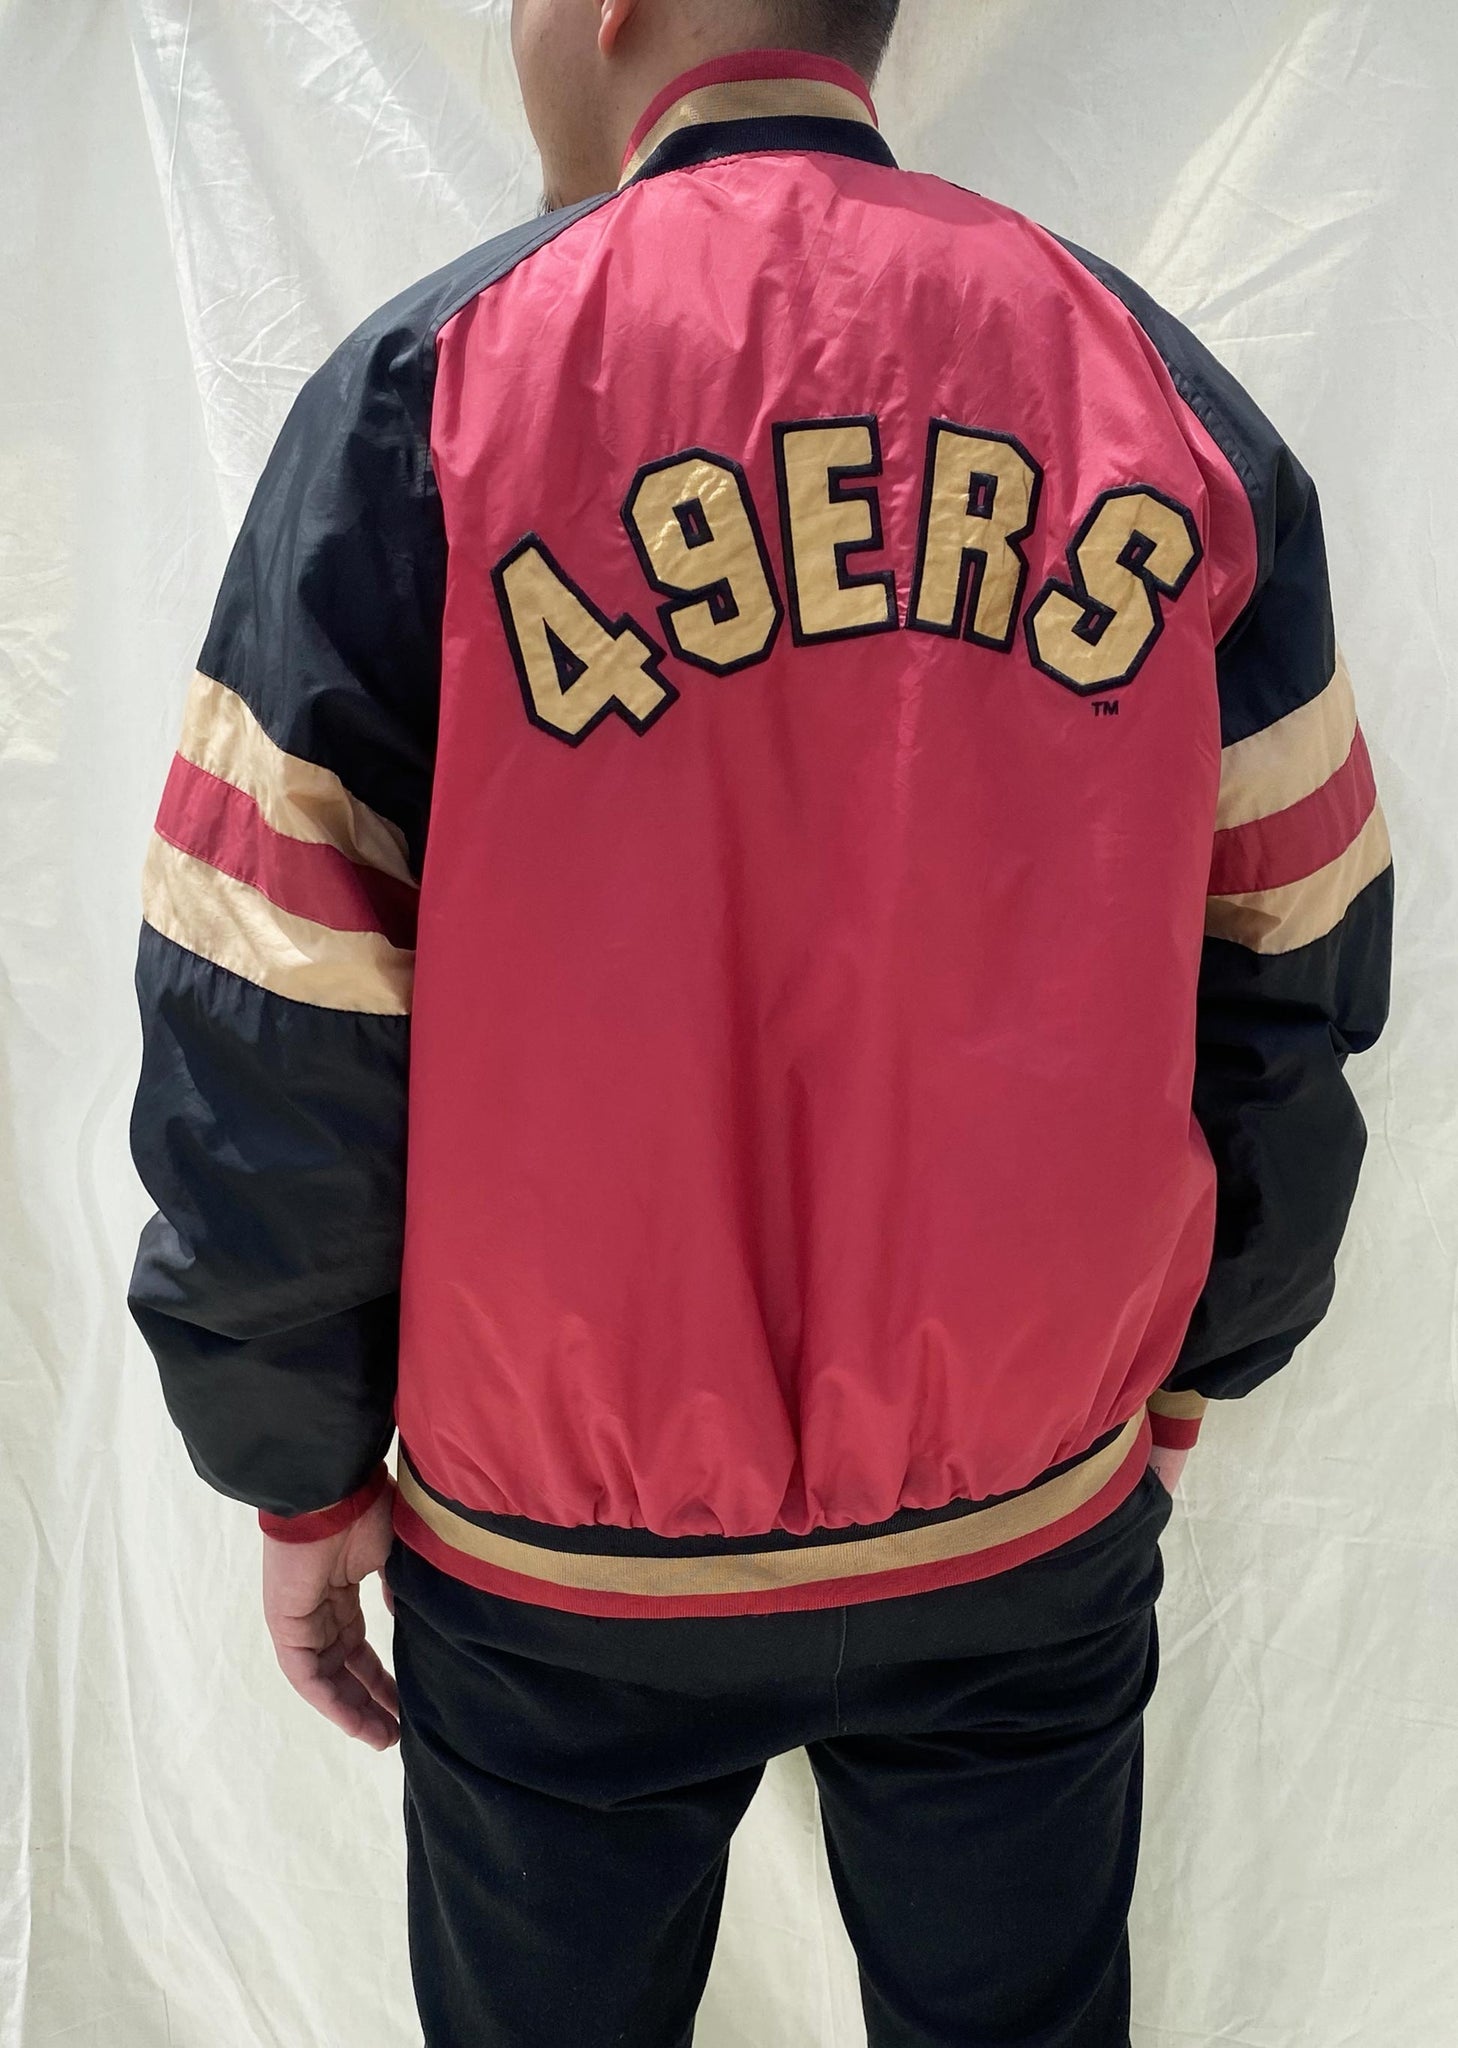 NFL St. Louis Rams Reversable Hooded Jacket (XL)